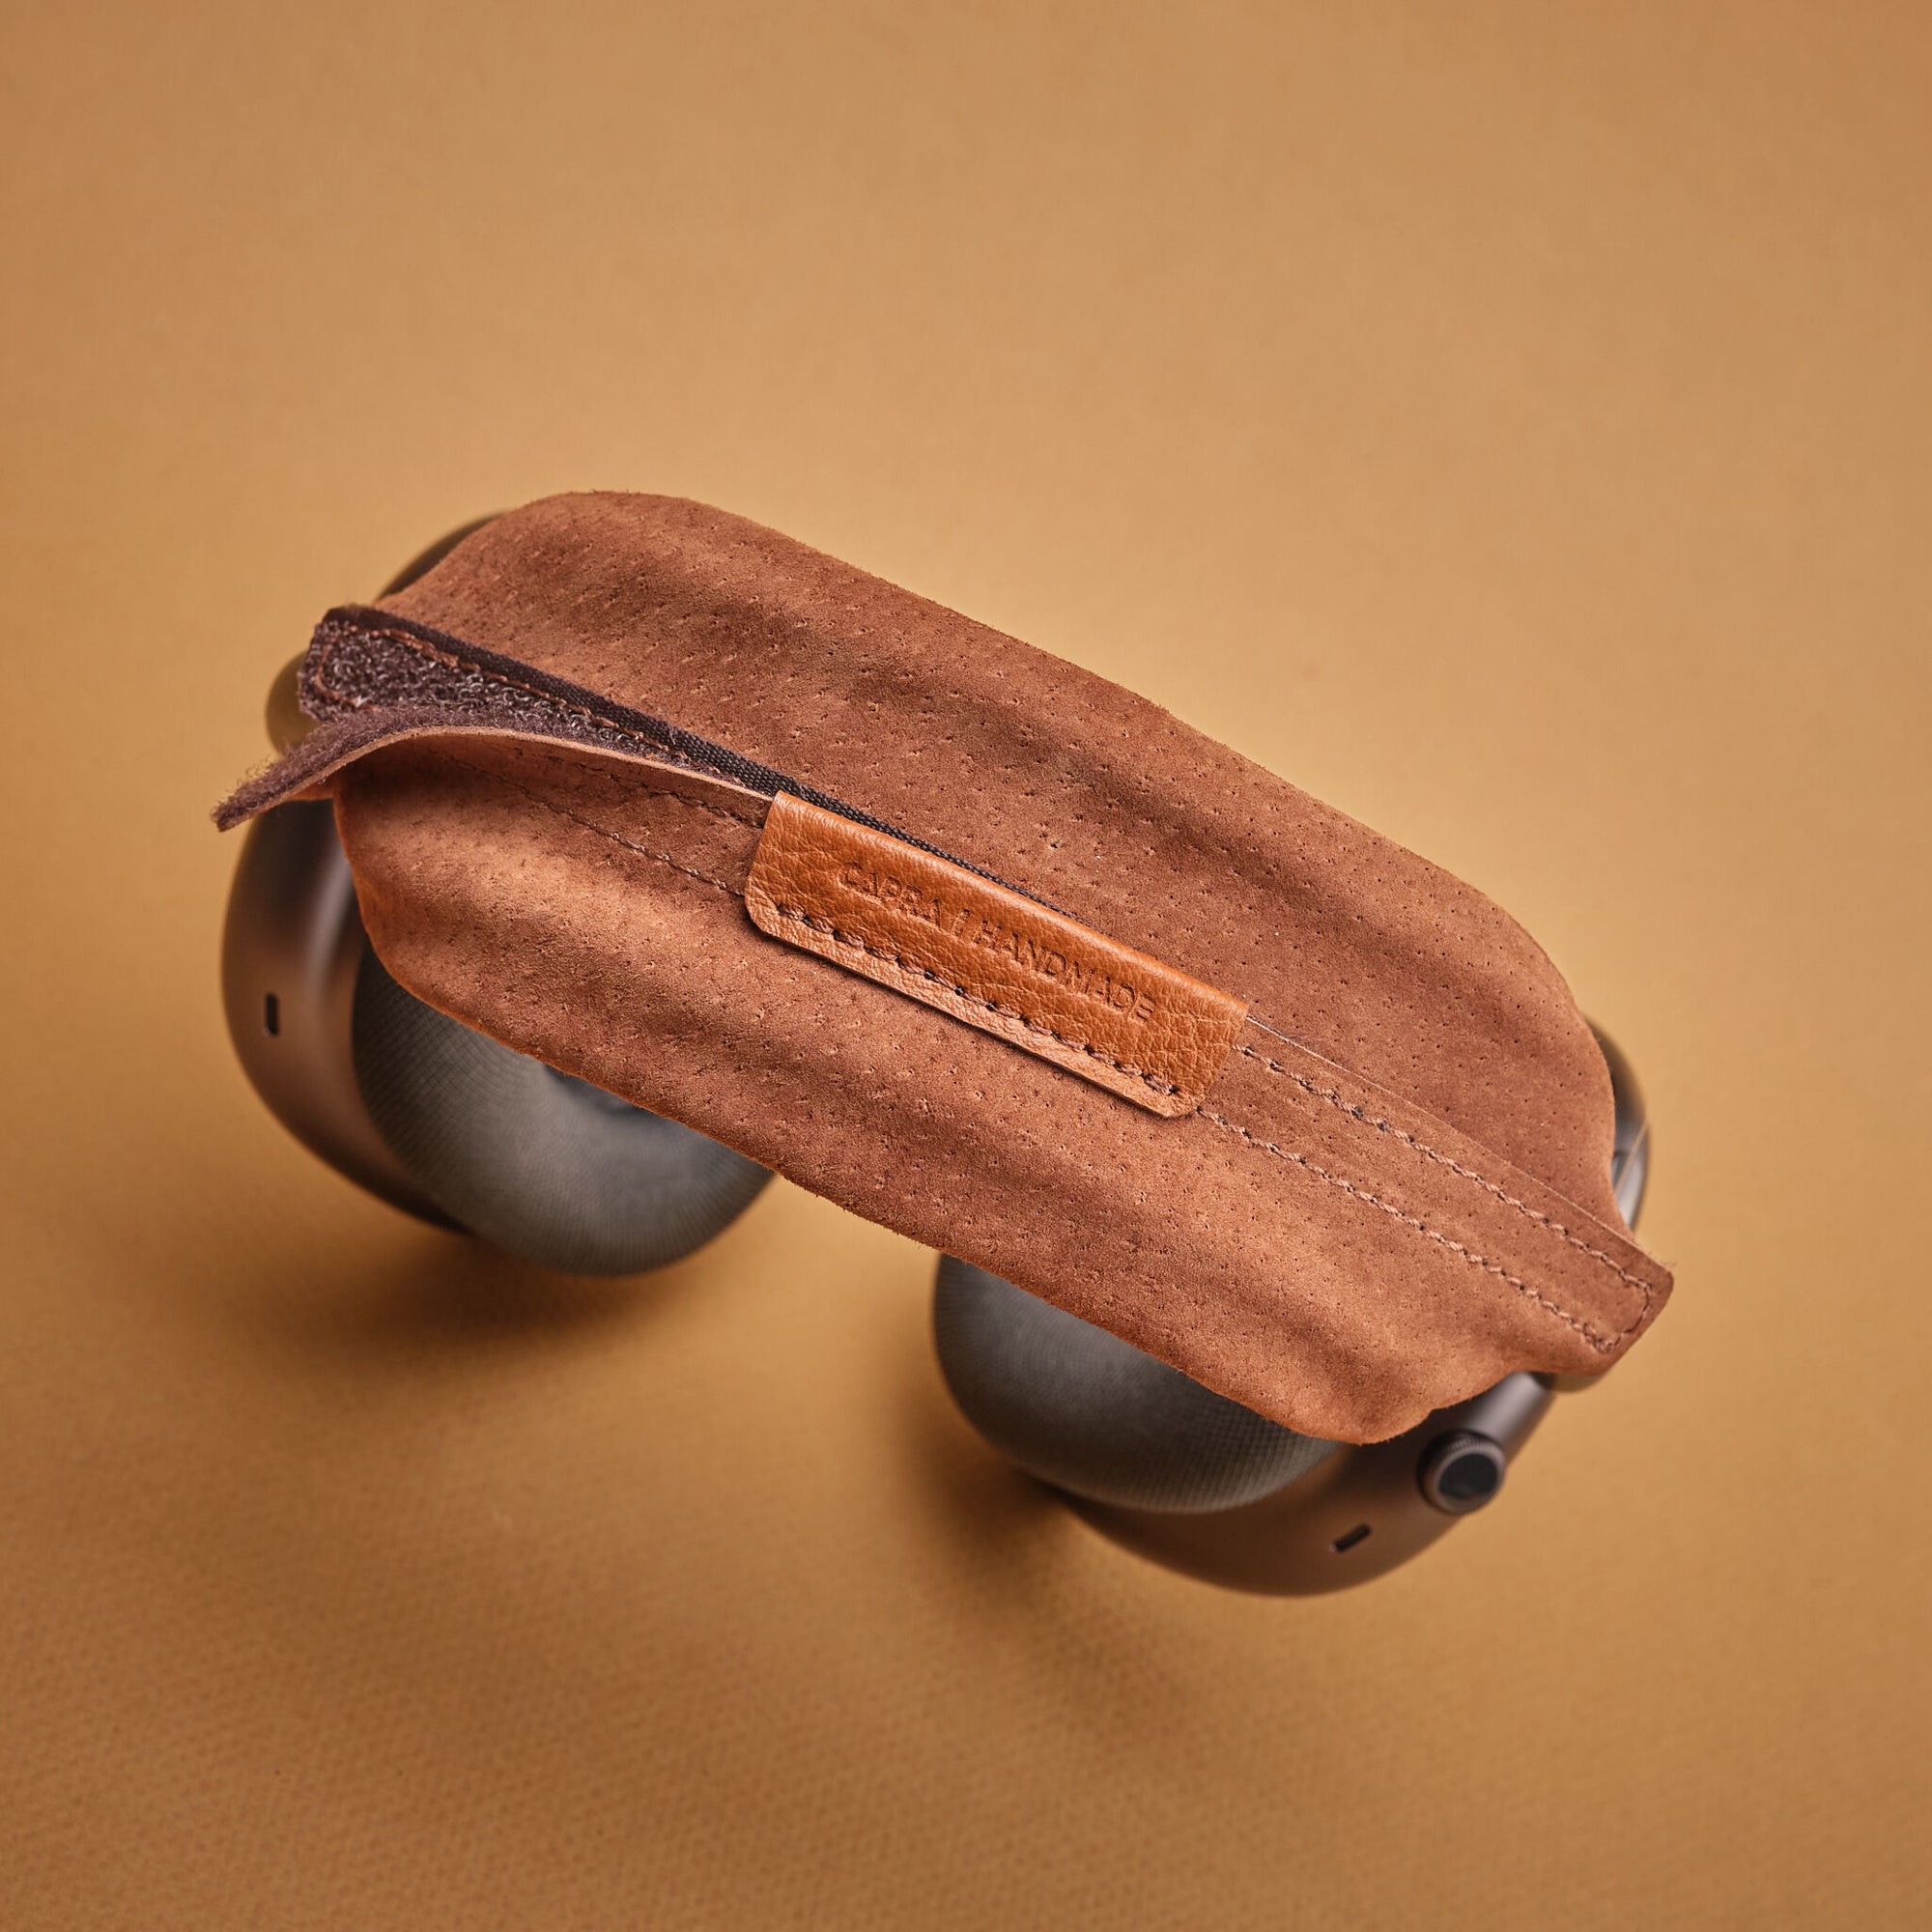 AirPods Max Case. Headphone Headband Cushion Tan by Capra Leather